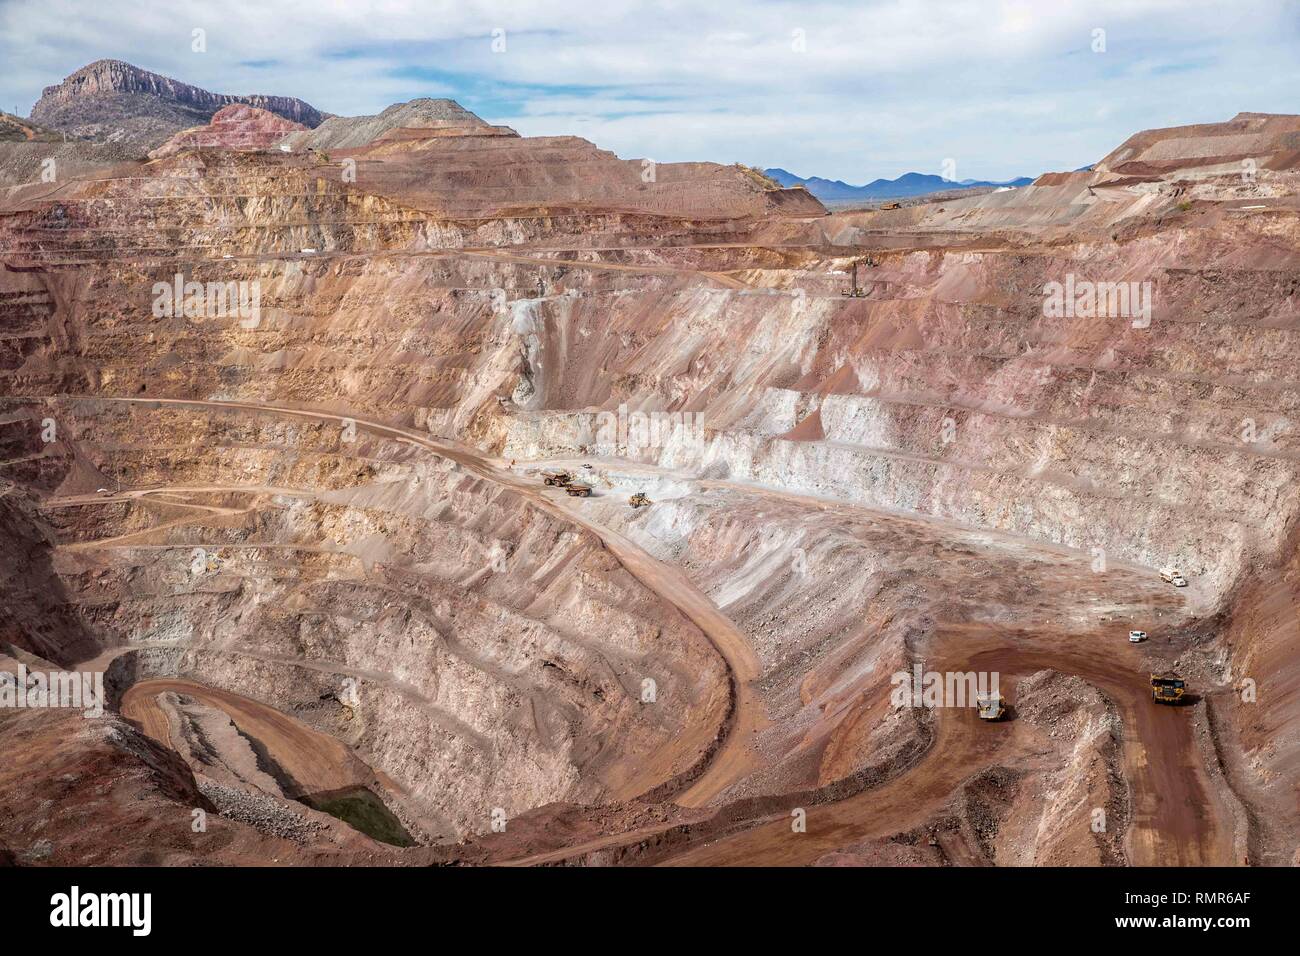 Vue panoramique de la mine à ciel ouvert de la mine d'or dans la région de Sonora, Mexique. vista panoramica del Tajo en abiernto un cielo mina de oro en Sonora, Mexique. Banque D'Images